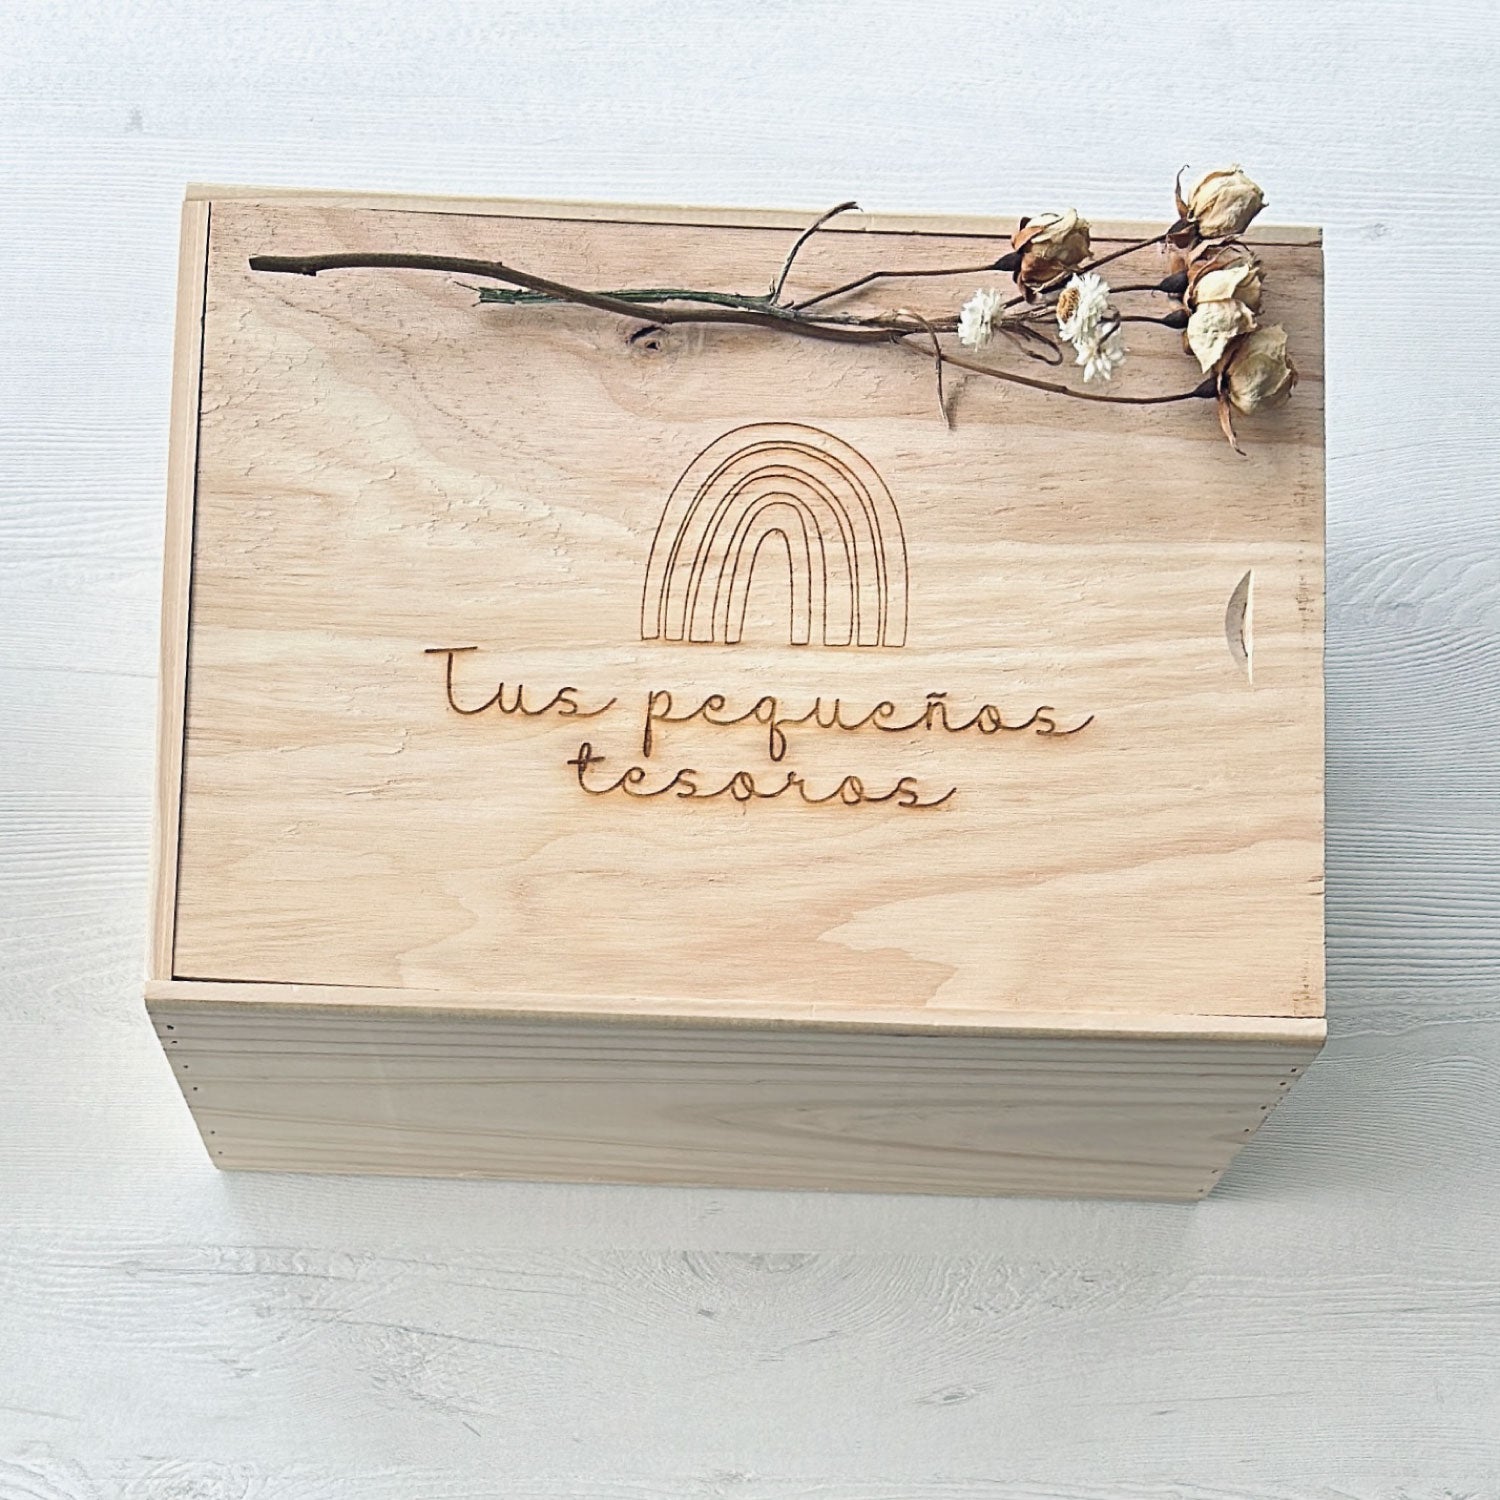 Caja de madera pequeña